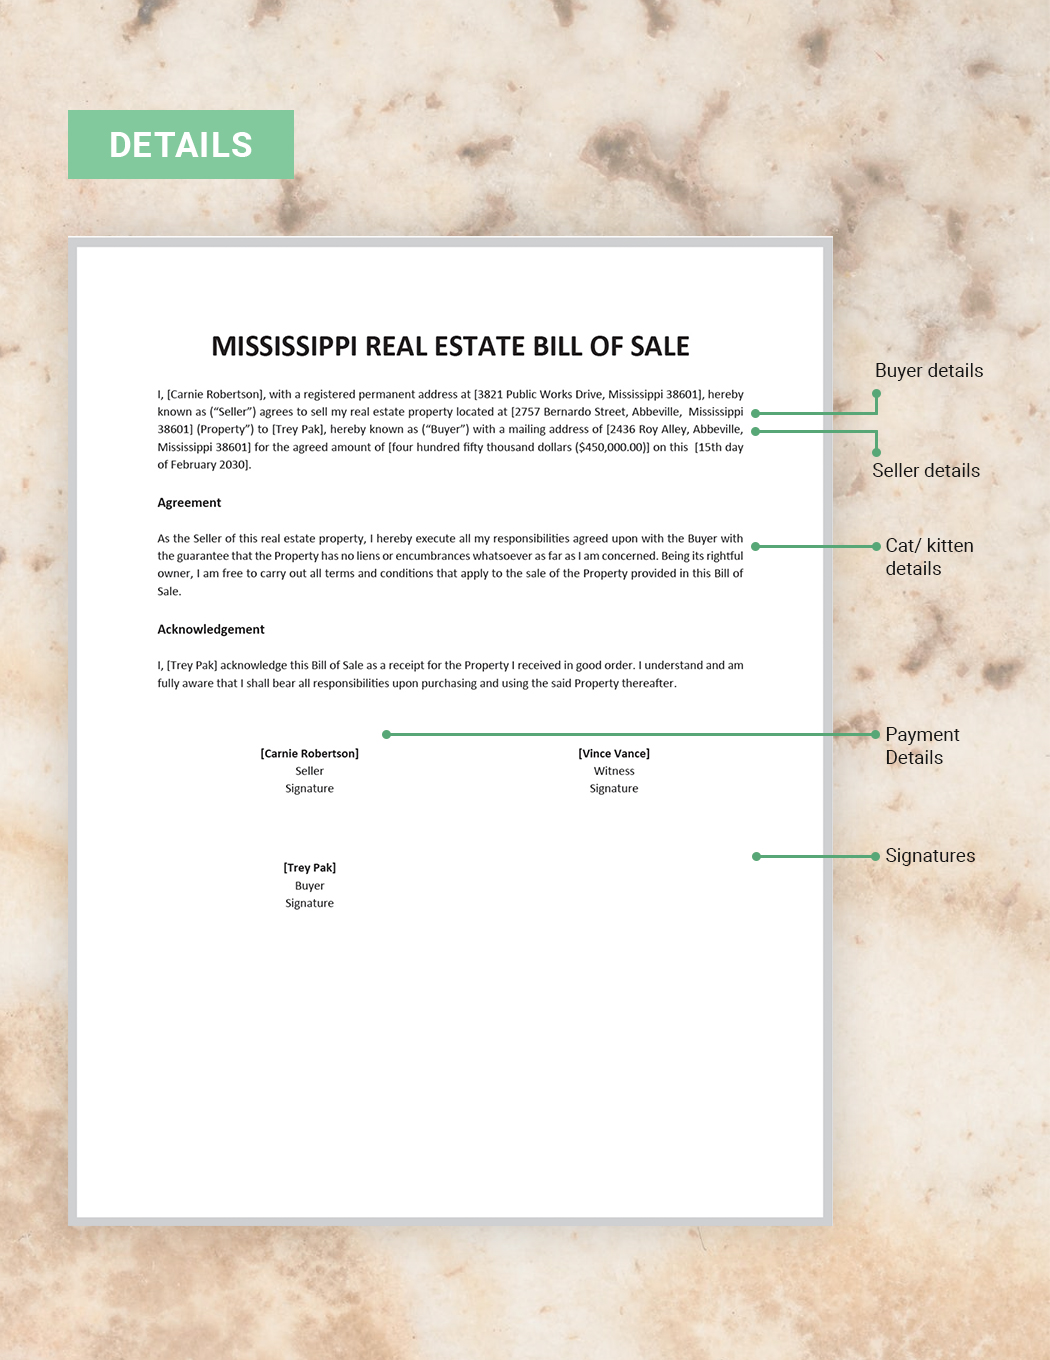 Mississippi Real Estate Bill of Sale Template